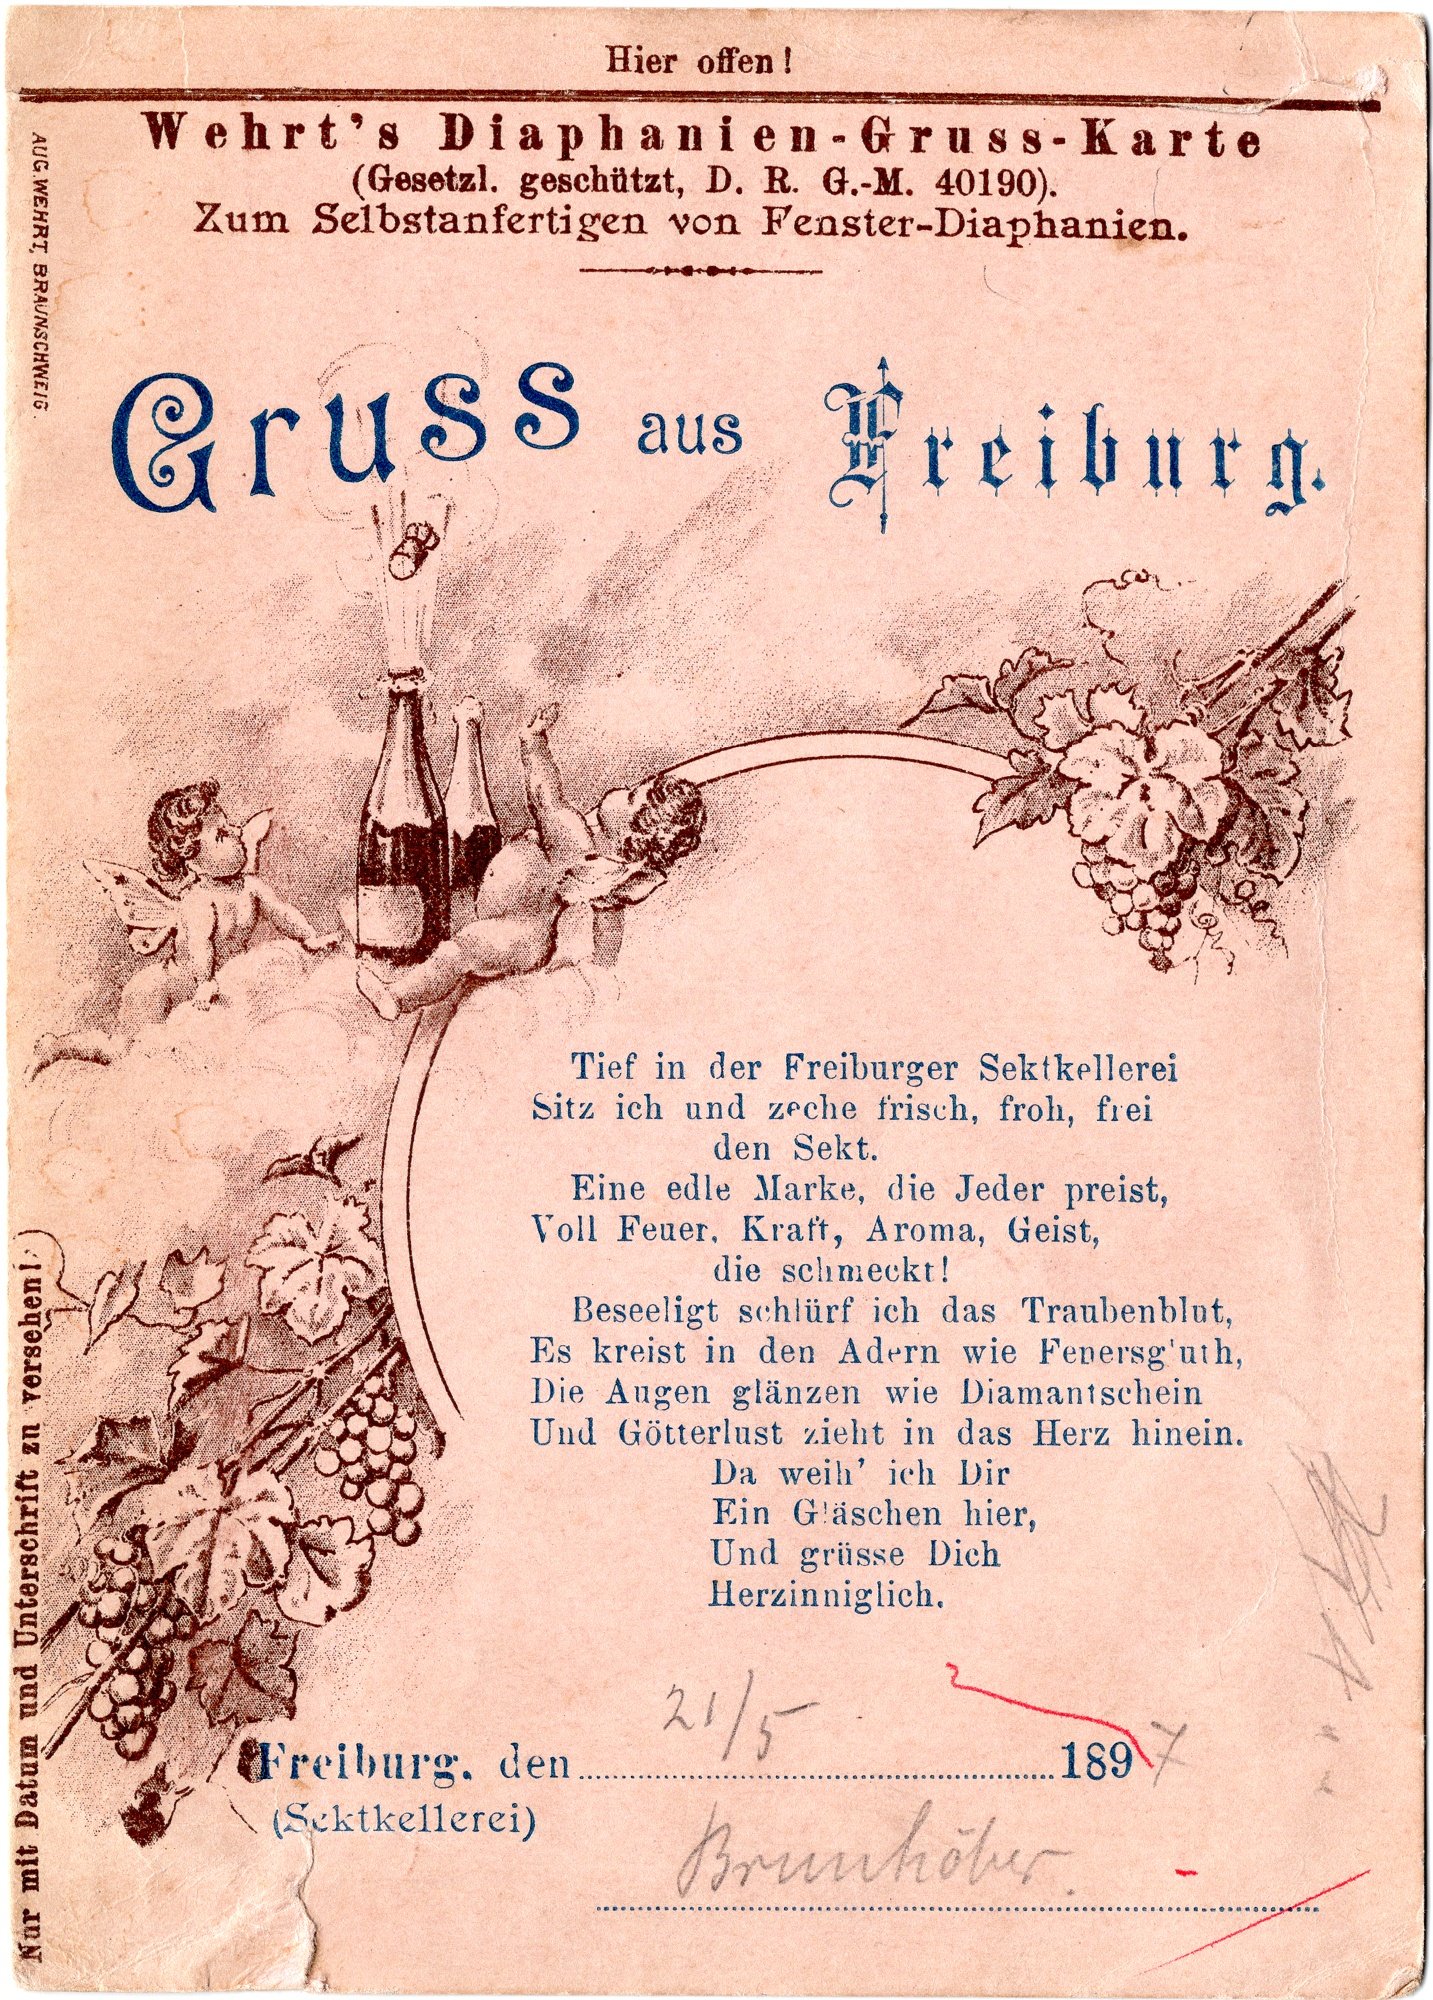 Gruss aus Freiburg. (Kulturstiftung Sachsen-Anhalt CC BY-NC-SA)